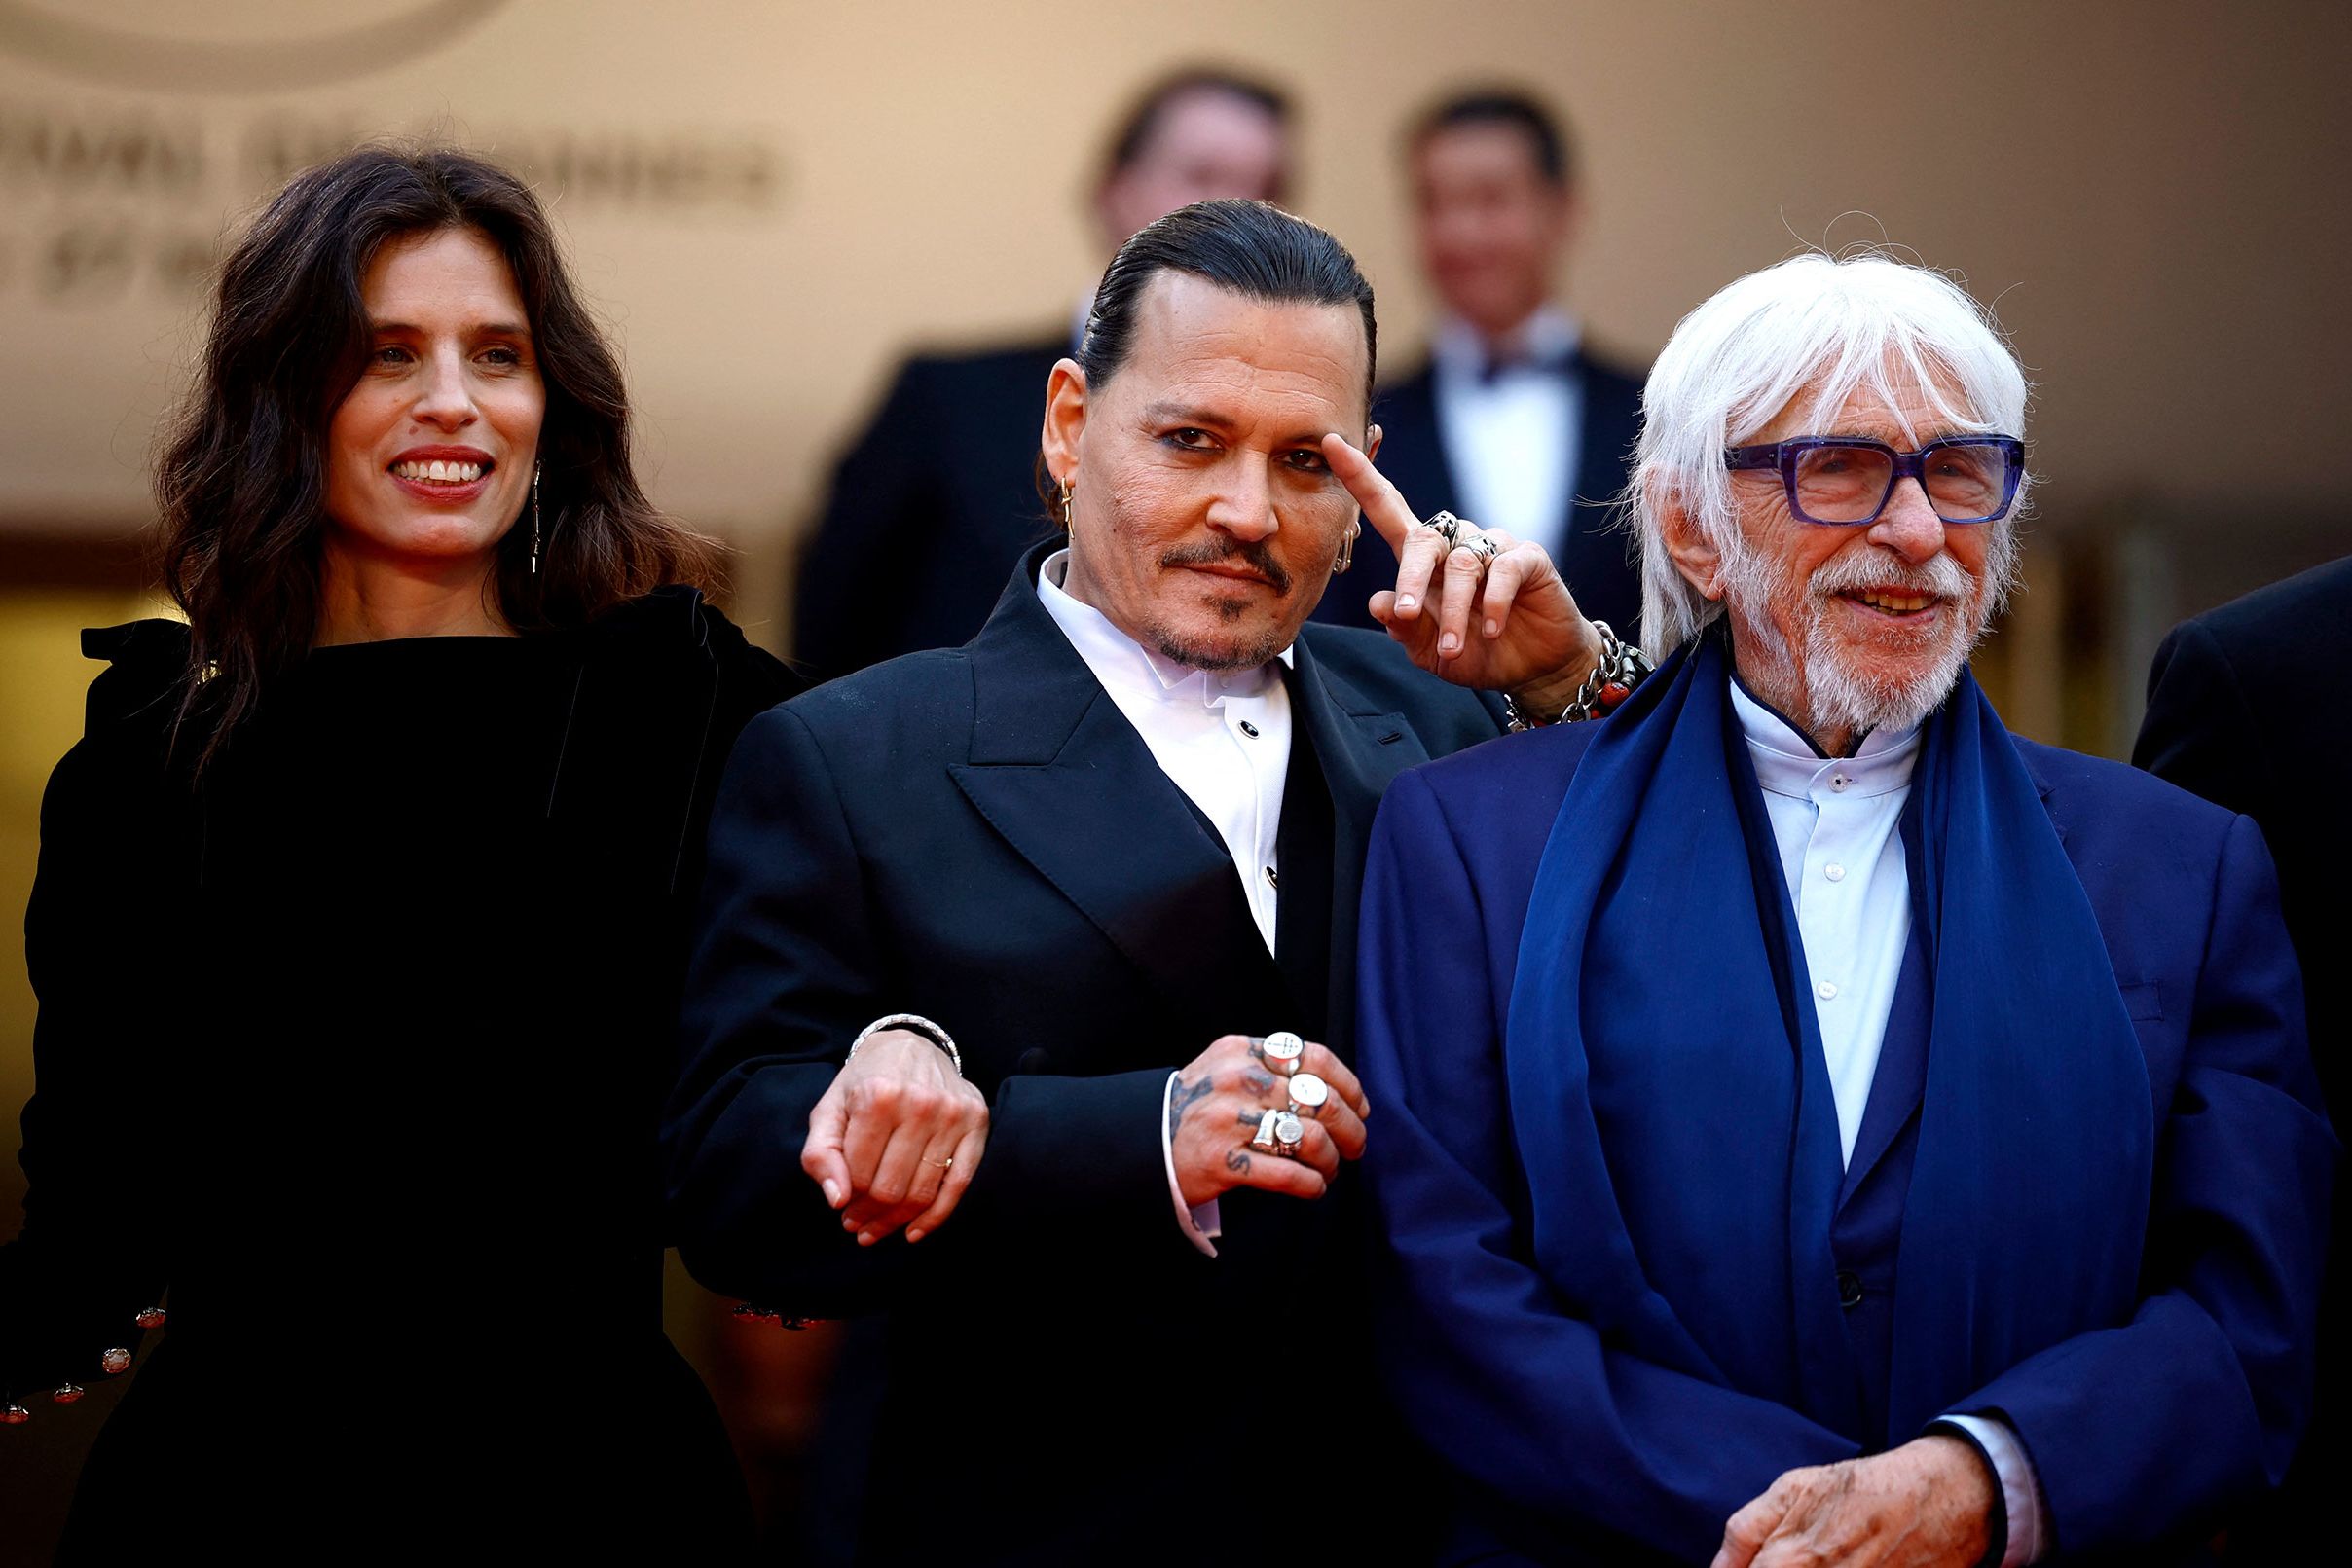 Johnny Depp's new film kicks off Cannes Film Festival | CNN